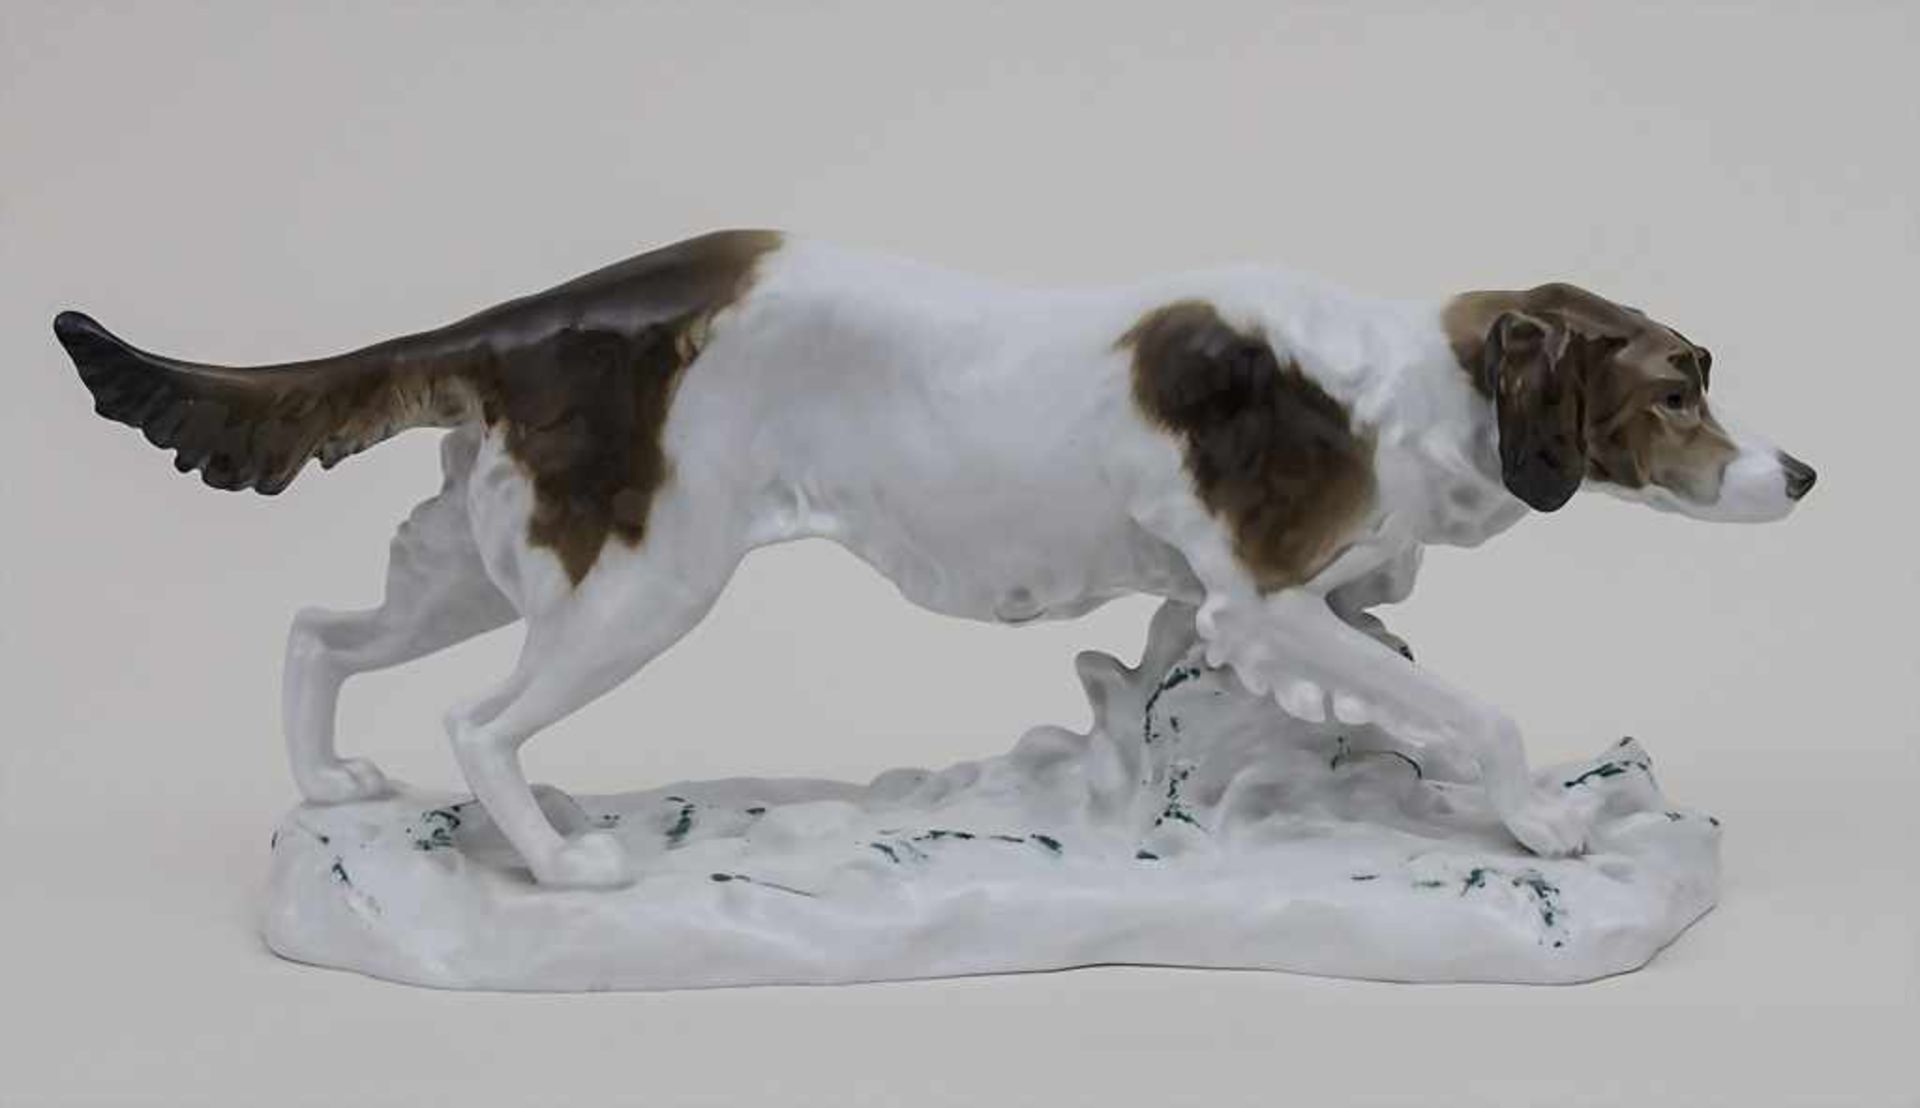 Jagdhund 'Pointer' / A hunting dog 'Pointer', Karl Ens, Volkstedt, 1. Hälfte 20. Jh. Material: